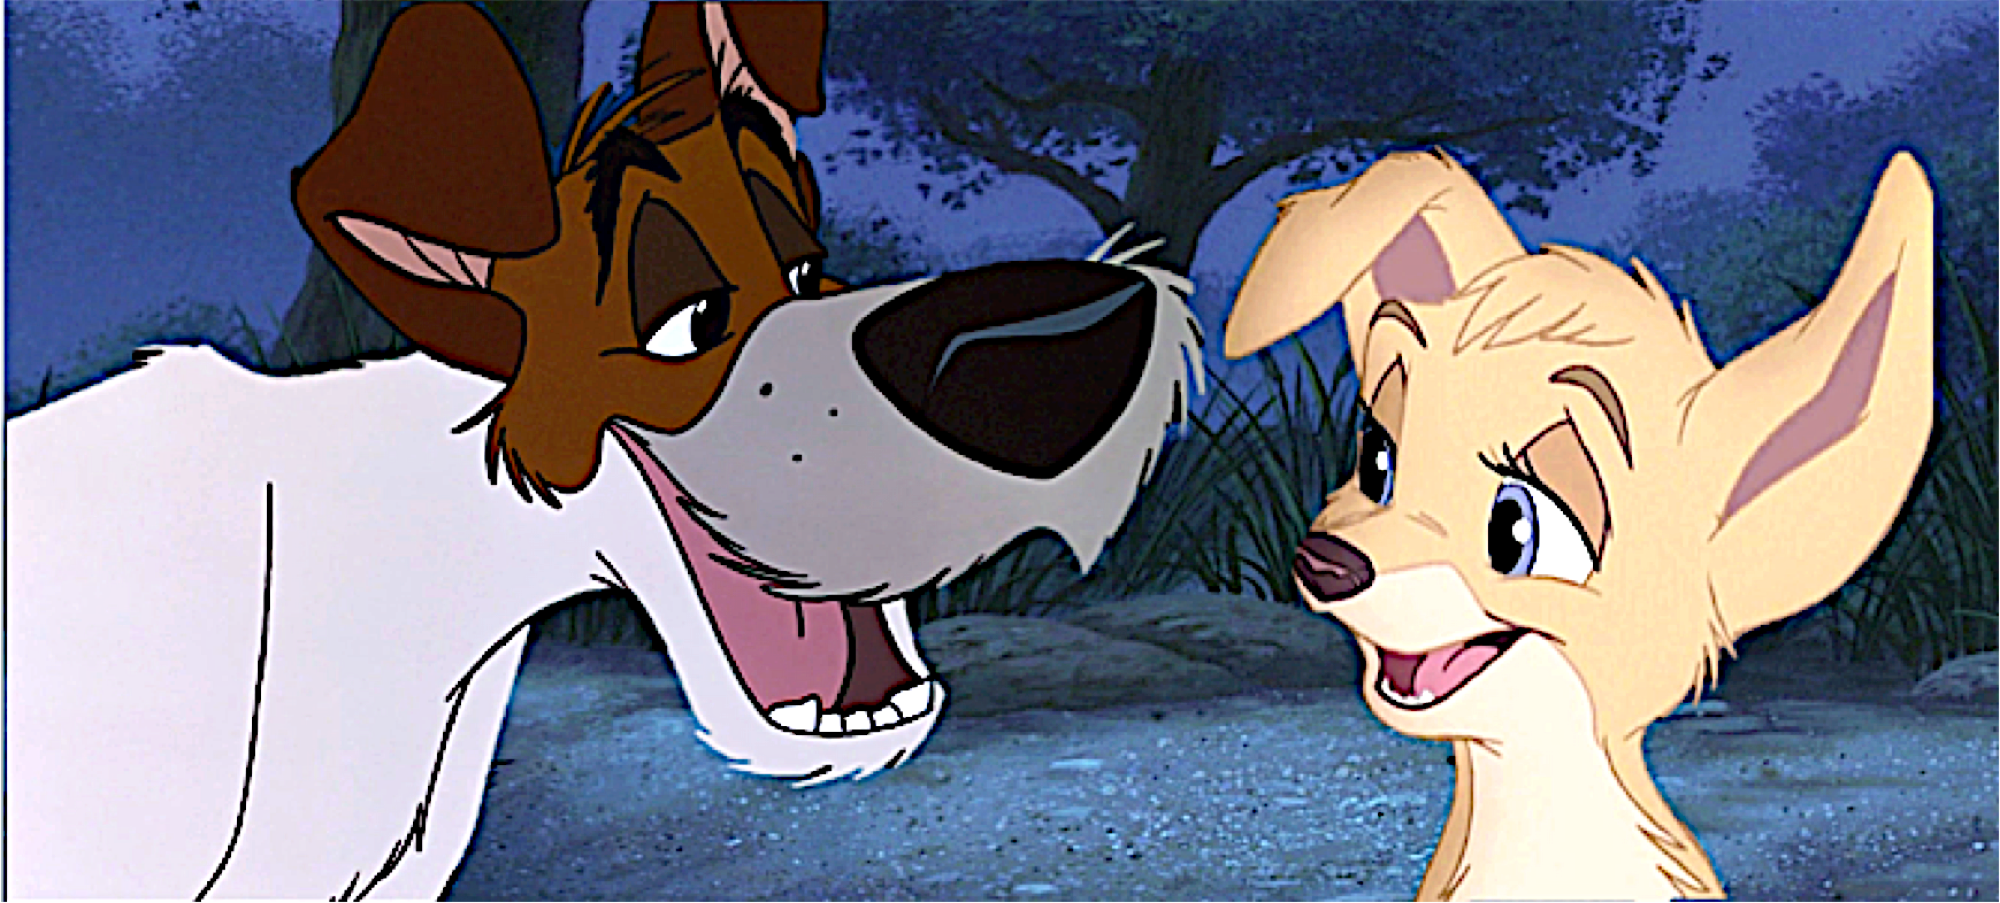 Disney animal crossovers Images on Fanpop.